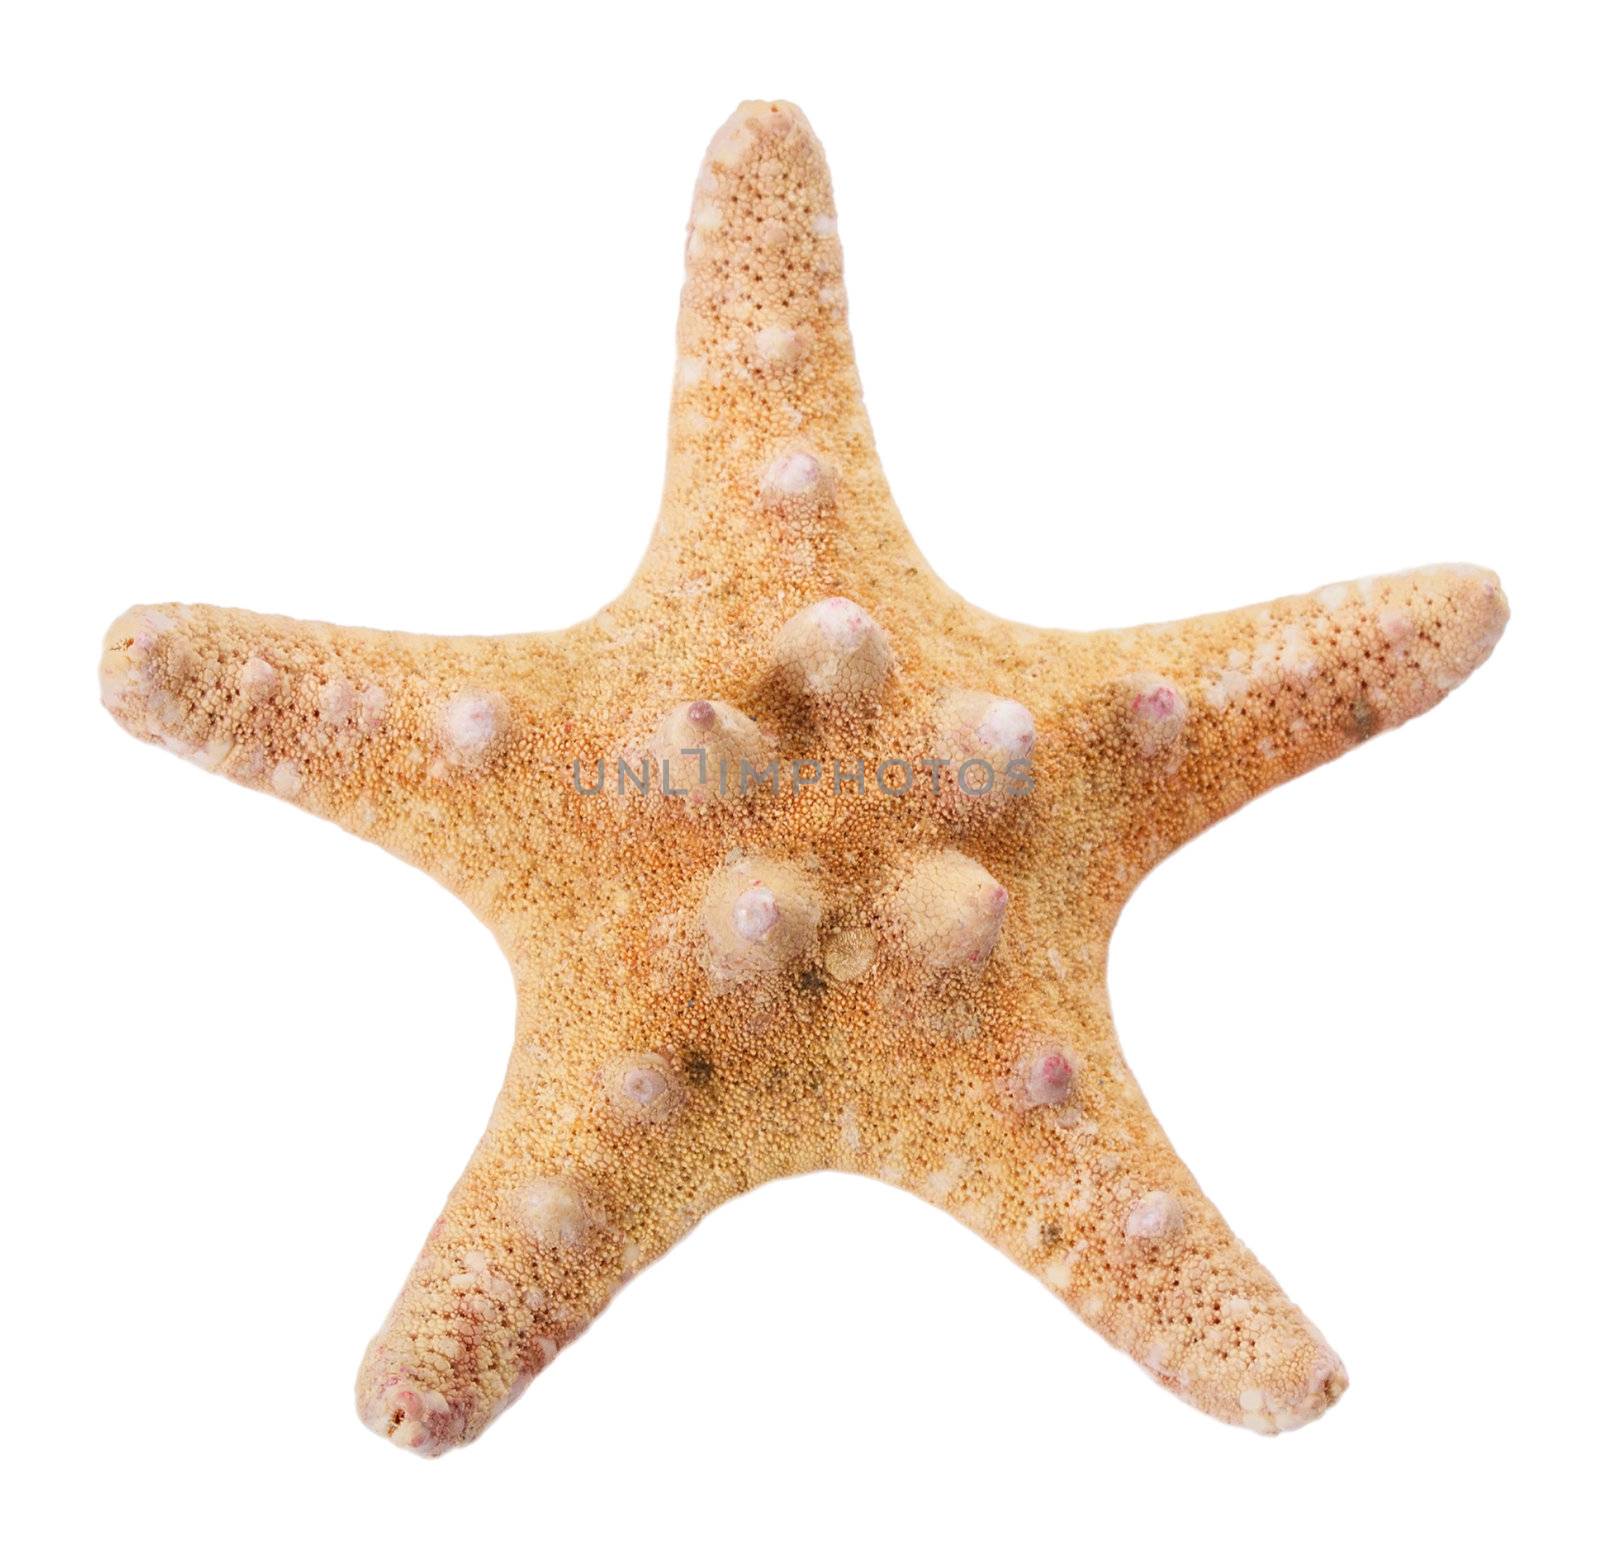 close-up starfish, isolated on white